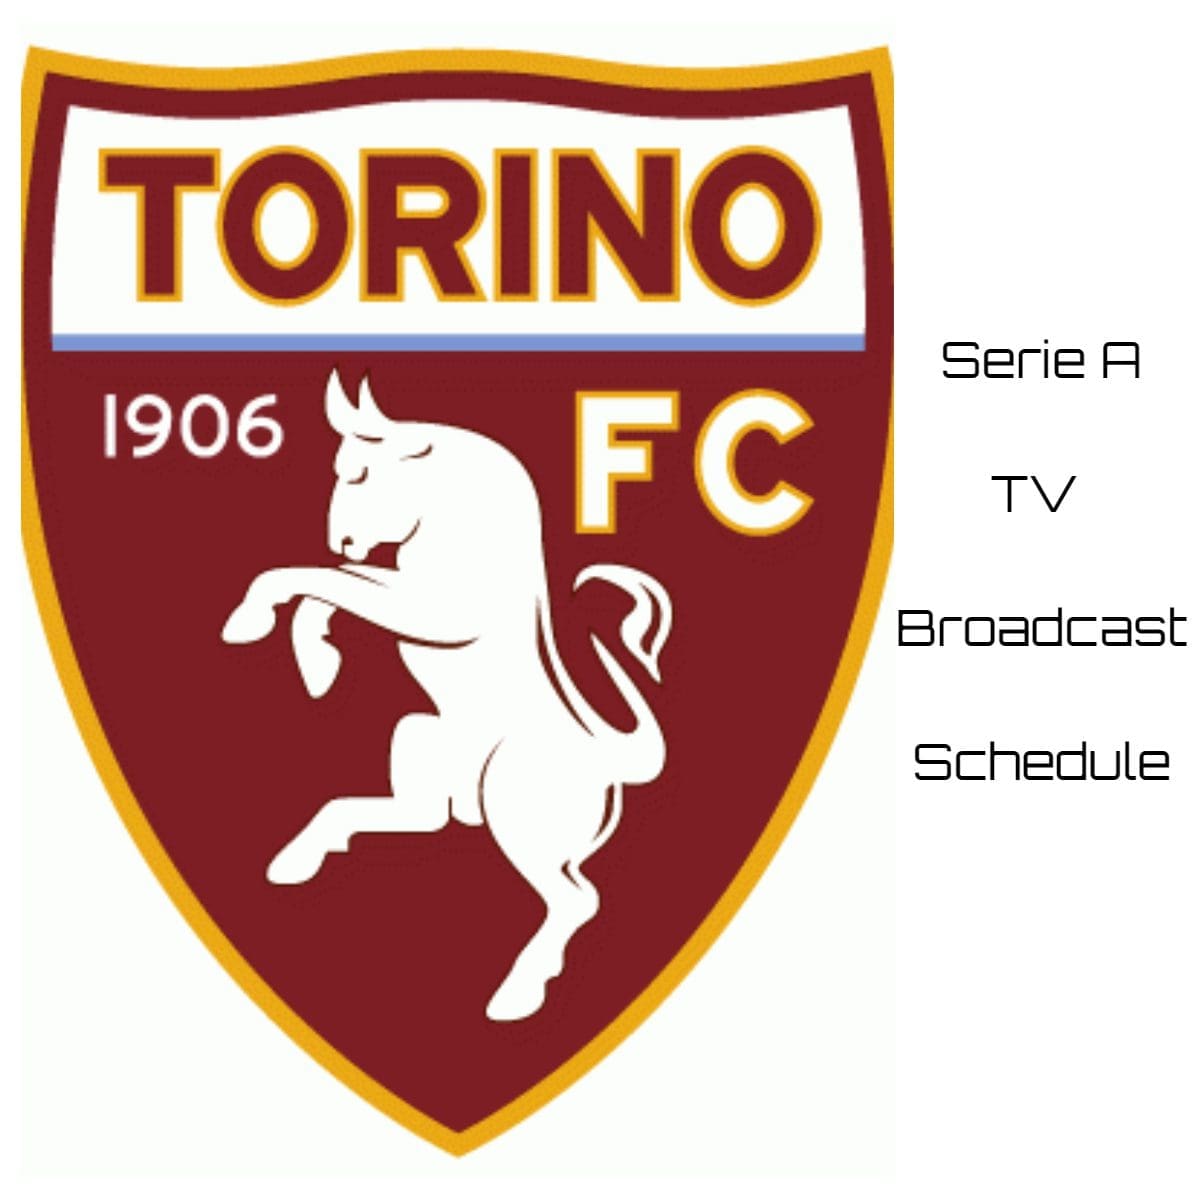 Torino TV Broadcast Schedule